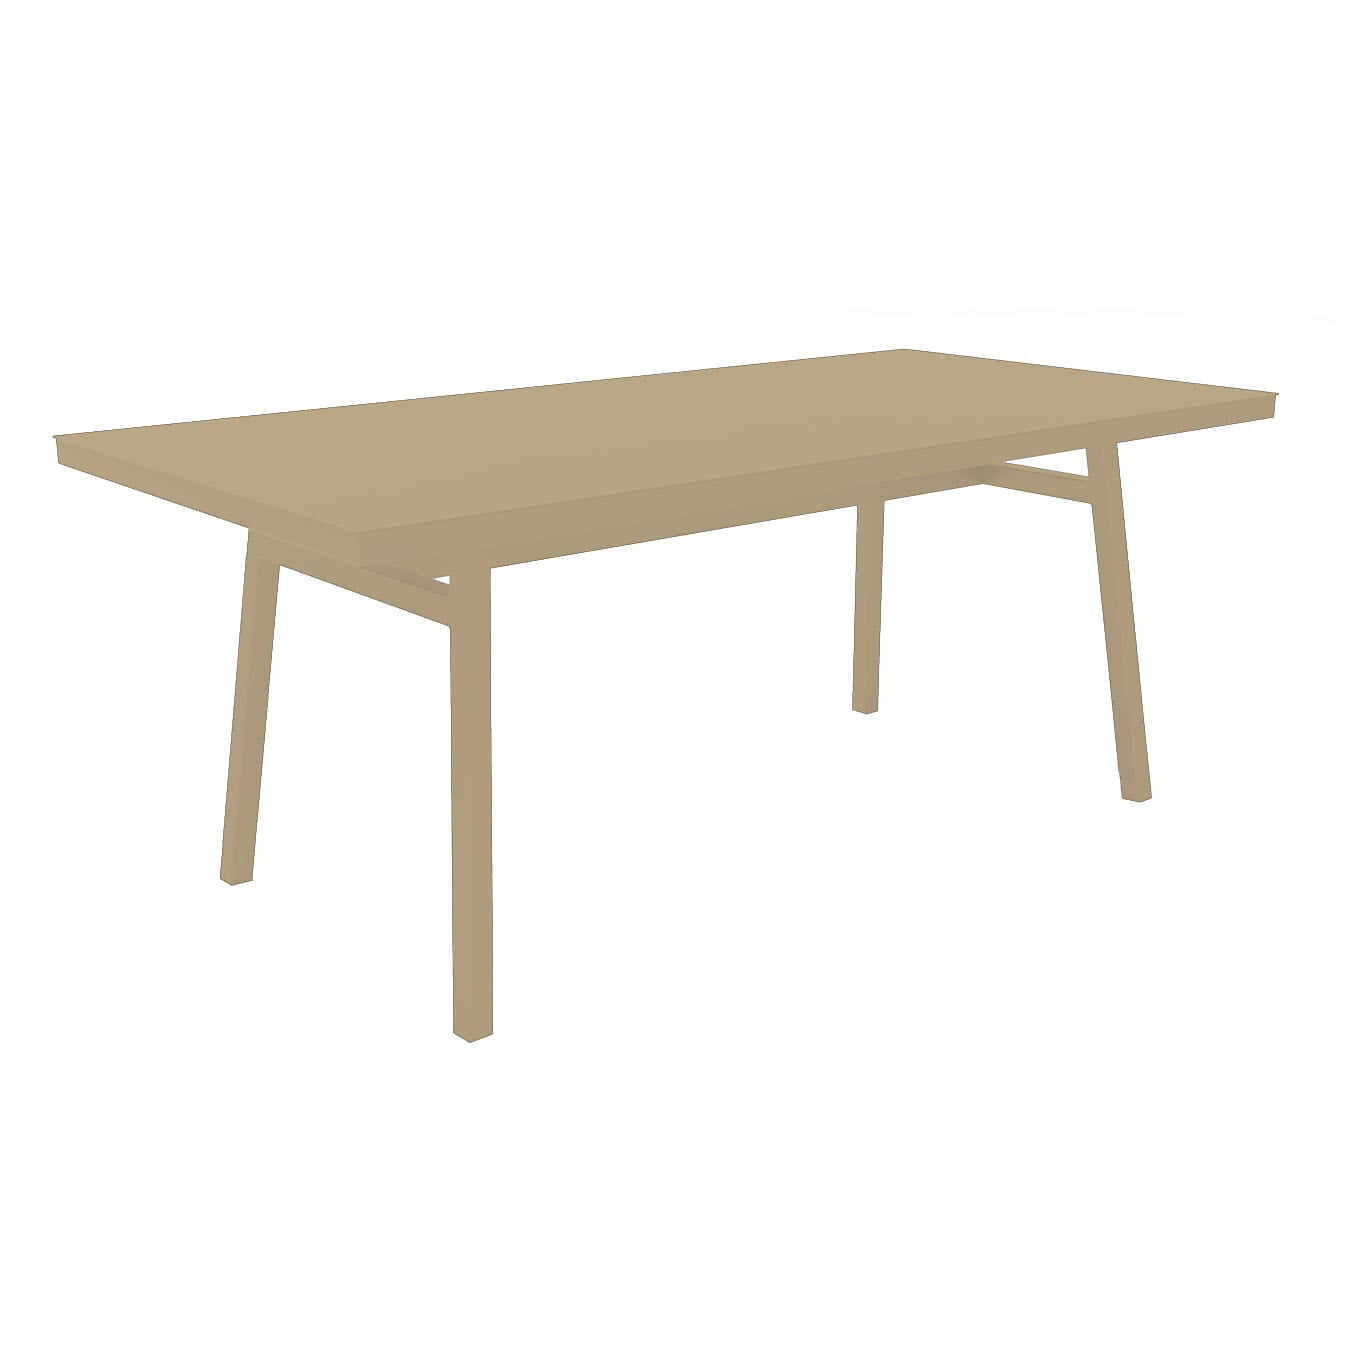 Resol Milano rectangular table indoors, outdoors 180x90 sand